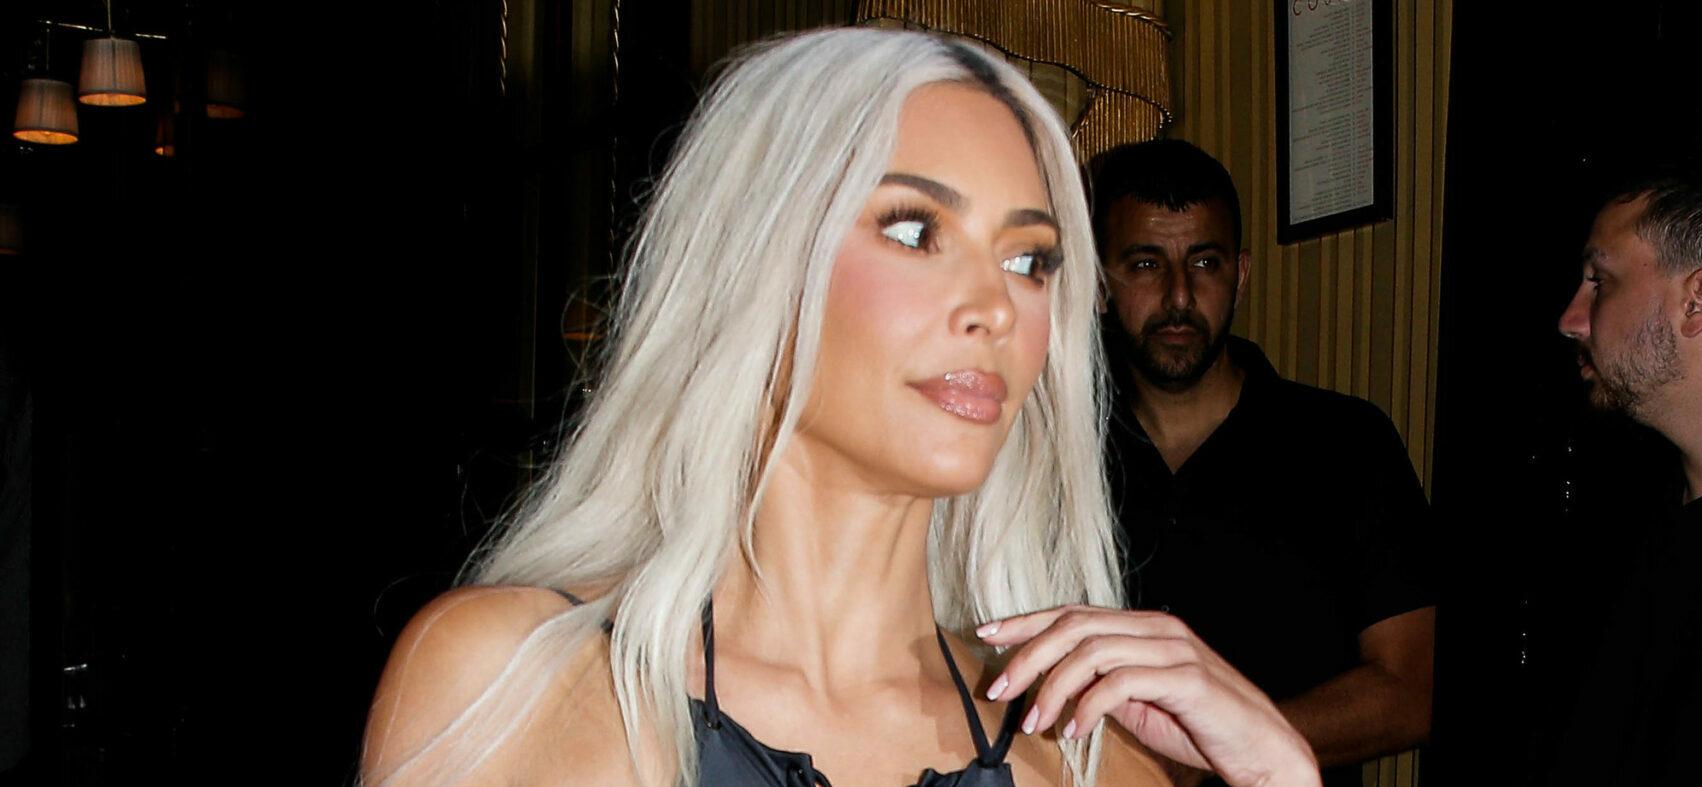 Kim Kardashian, North West and Ryan leaving Costes restaurant in Paris during Paris Fashion Week